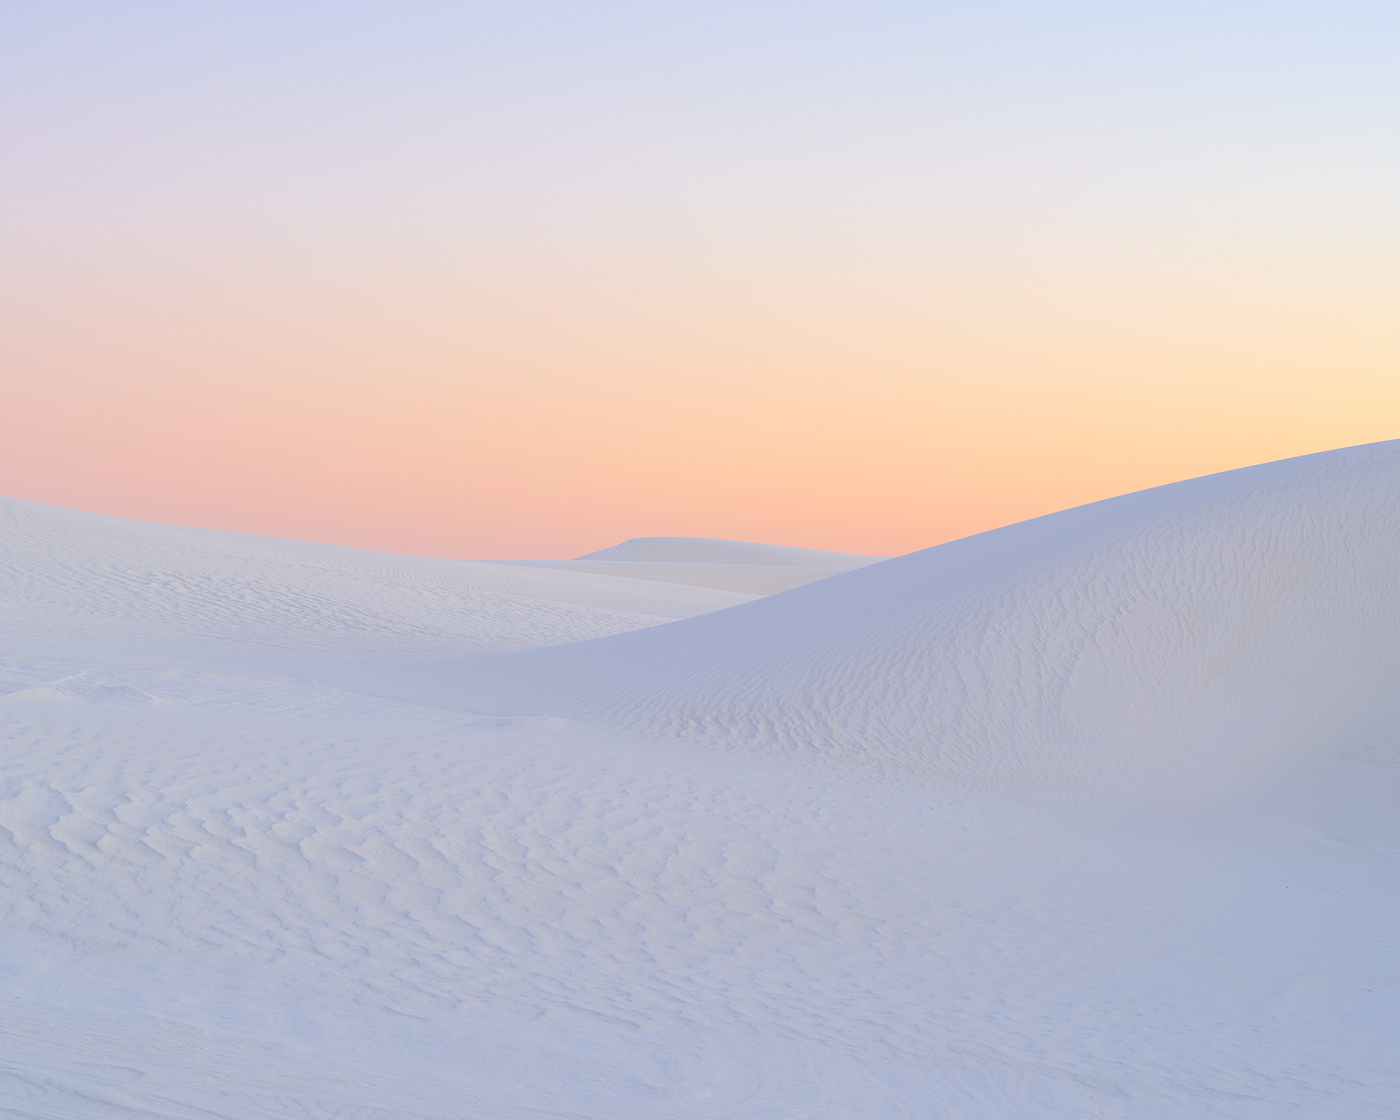 dune desert colorful new mexico Landscape desert color sand dunes White Sands pastel minimal